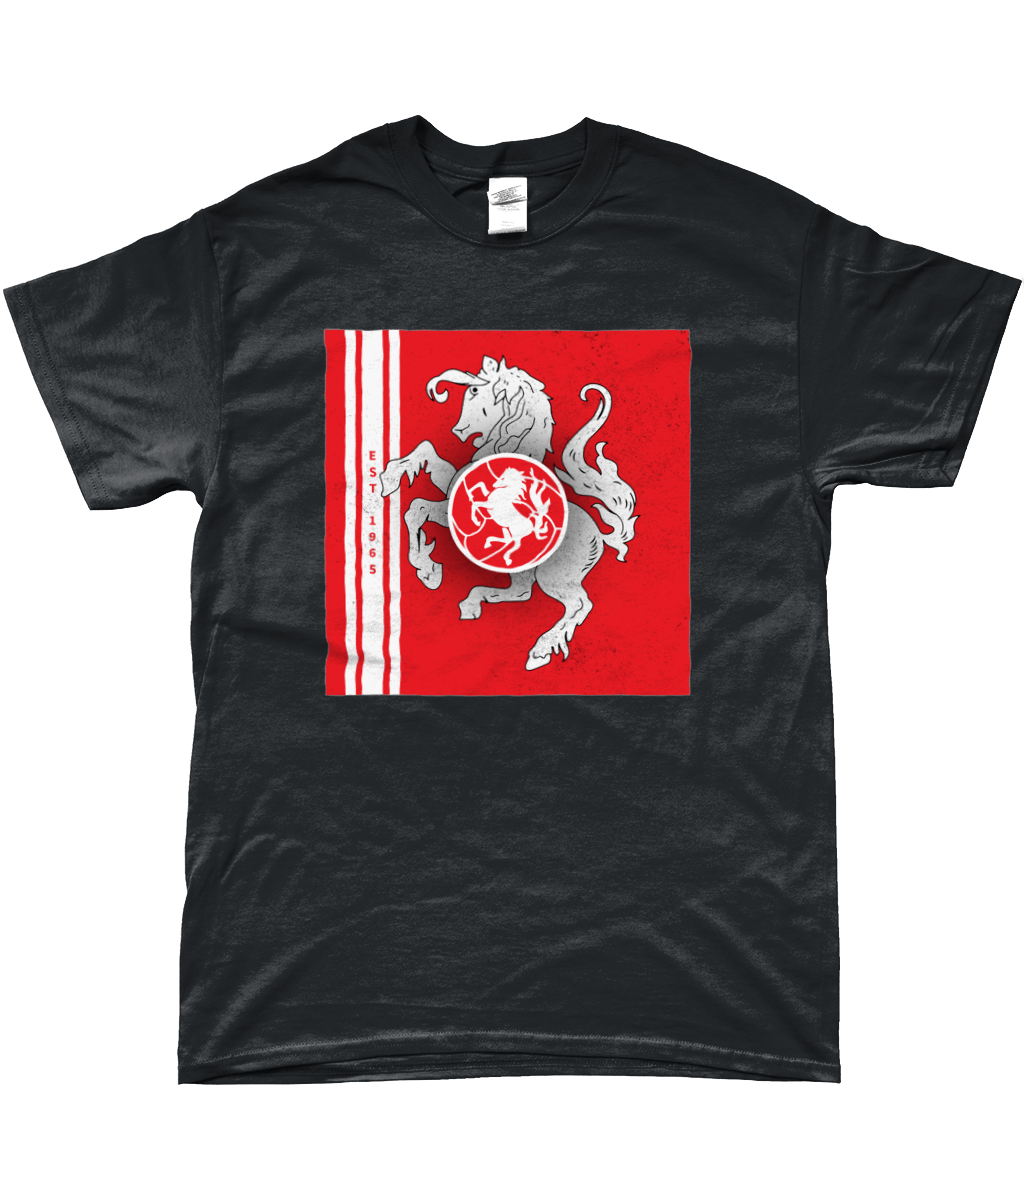 FC Twente - Het Twentse Ros T-shirt